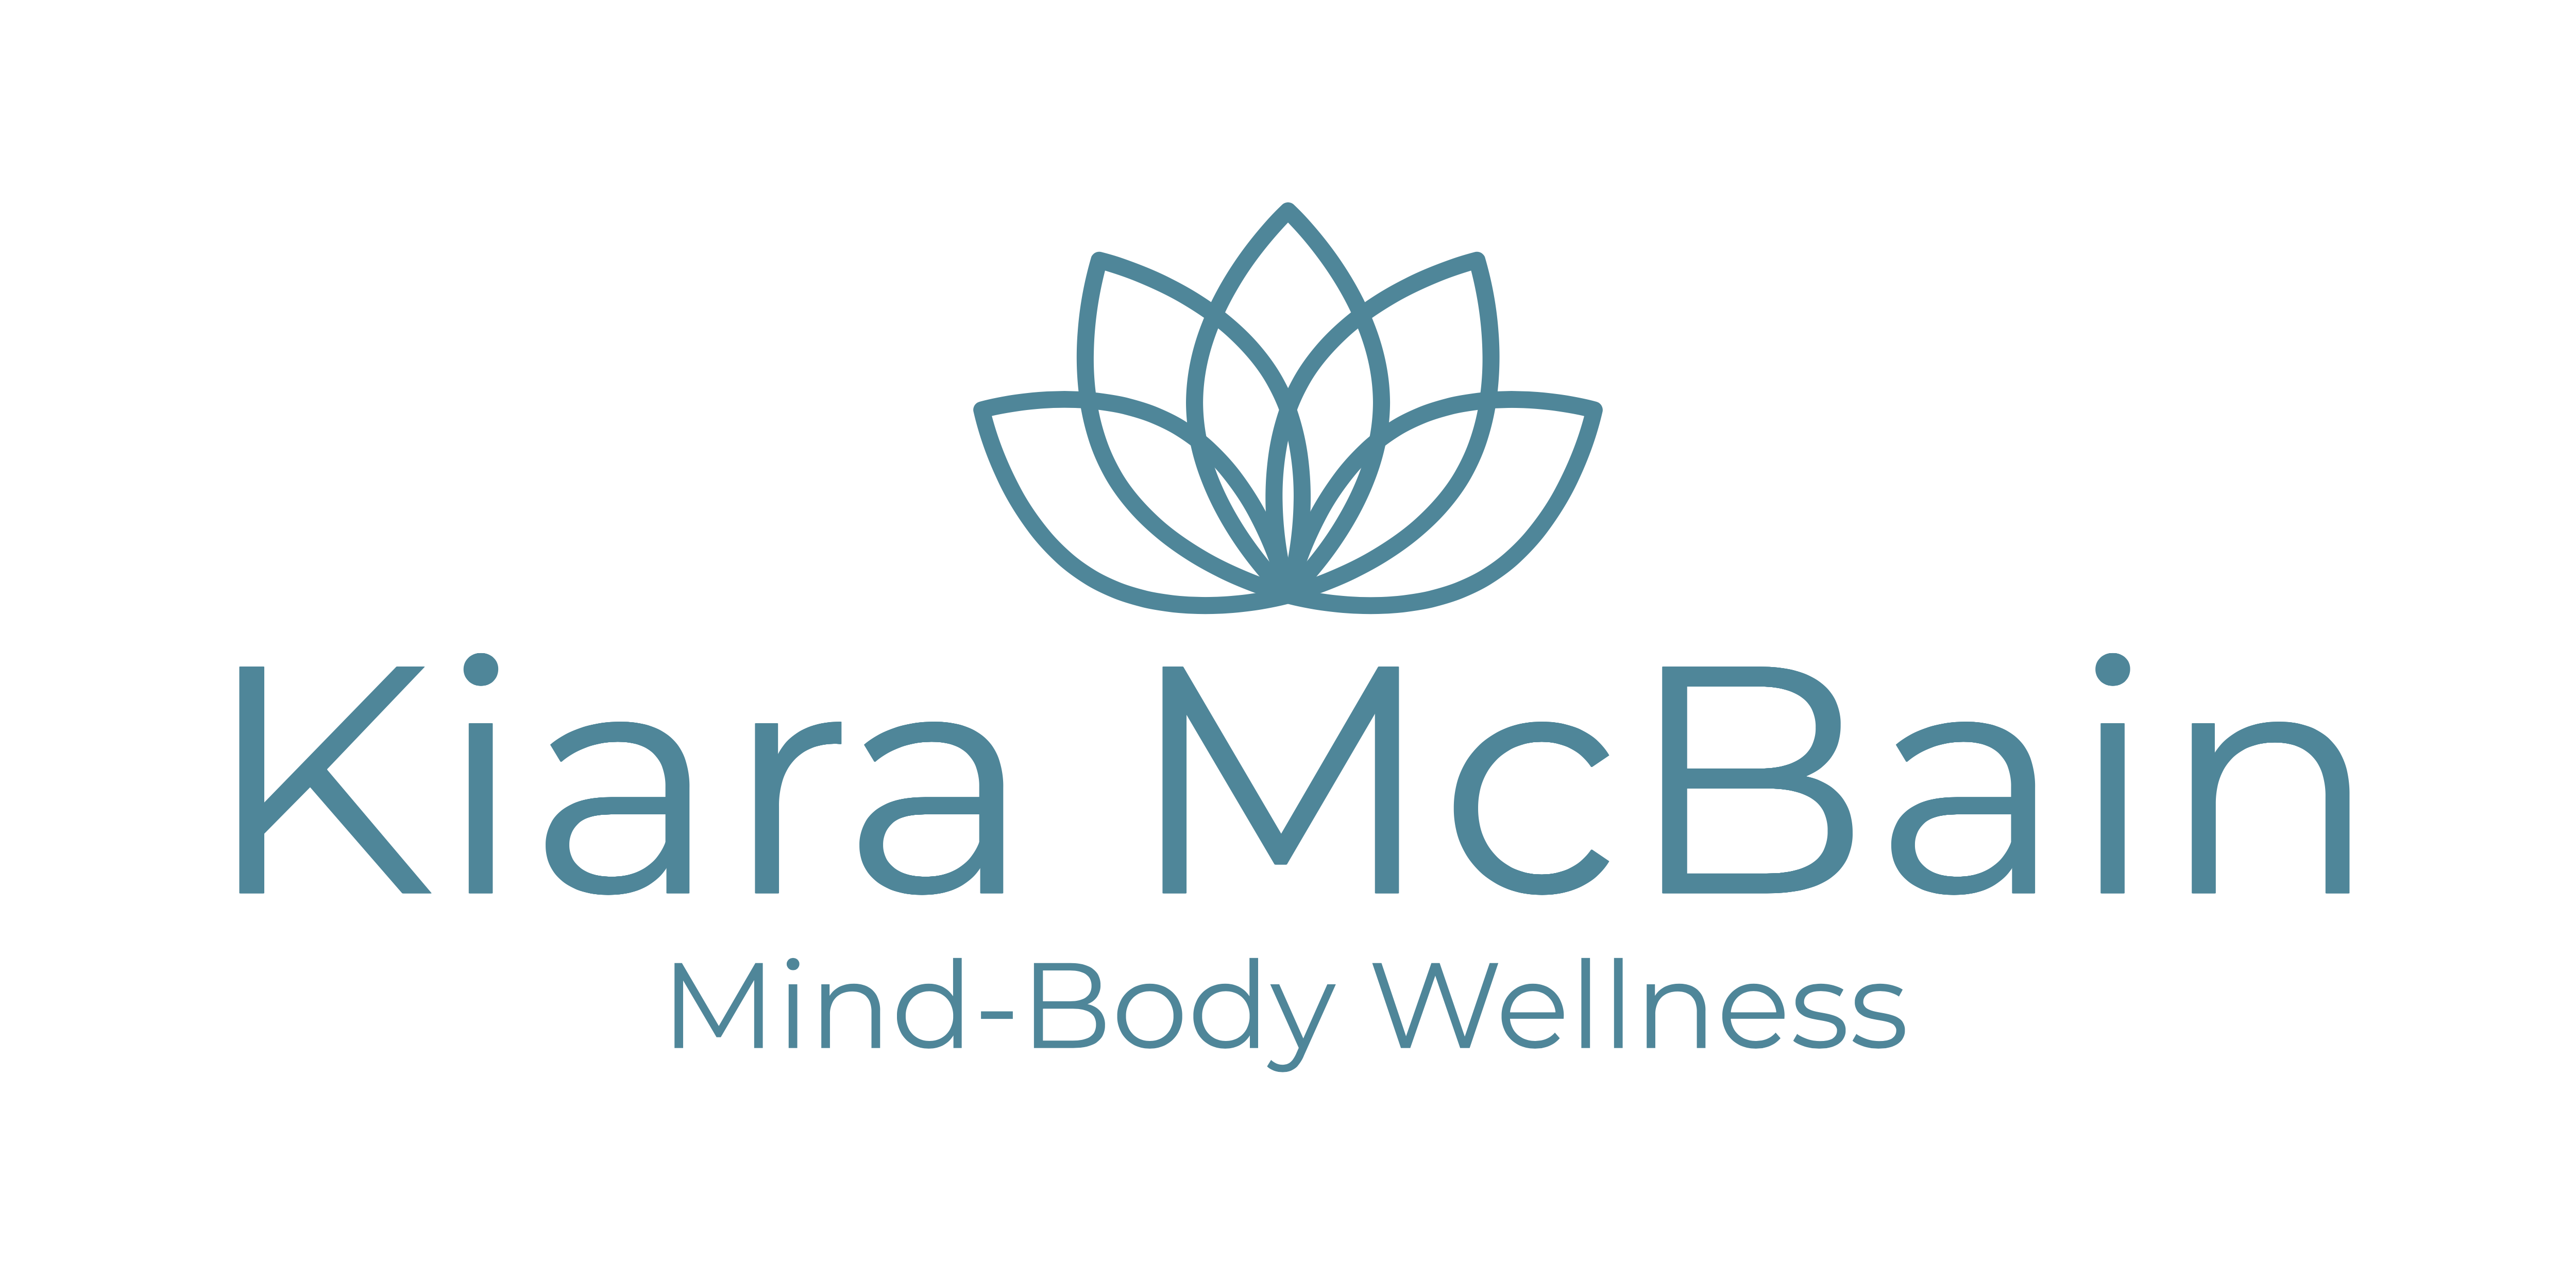 Kiara McBain Mind-Body Wellness Logo